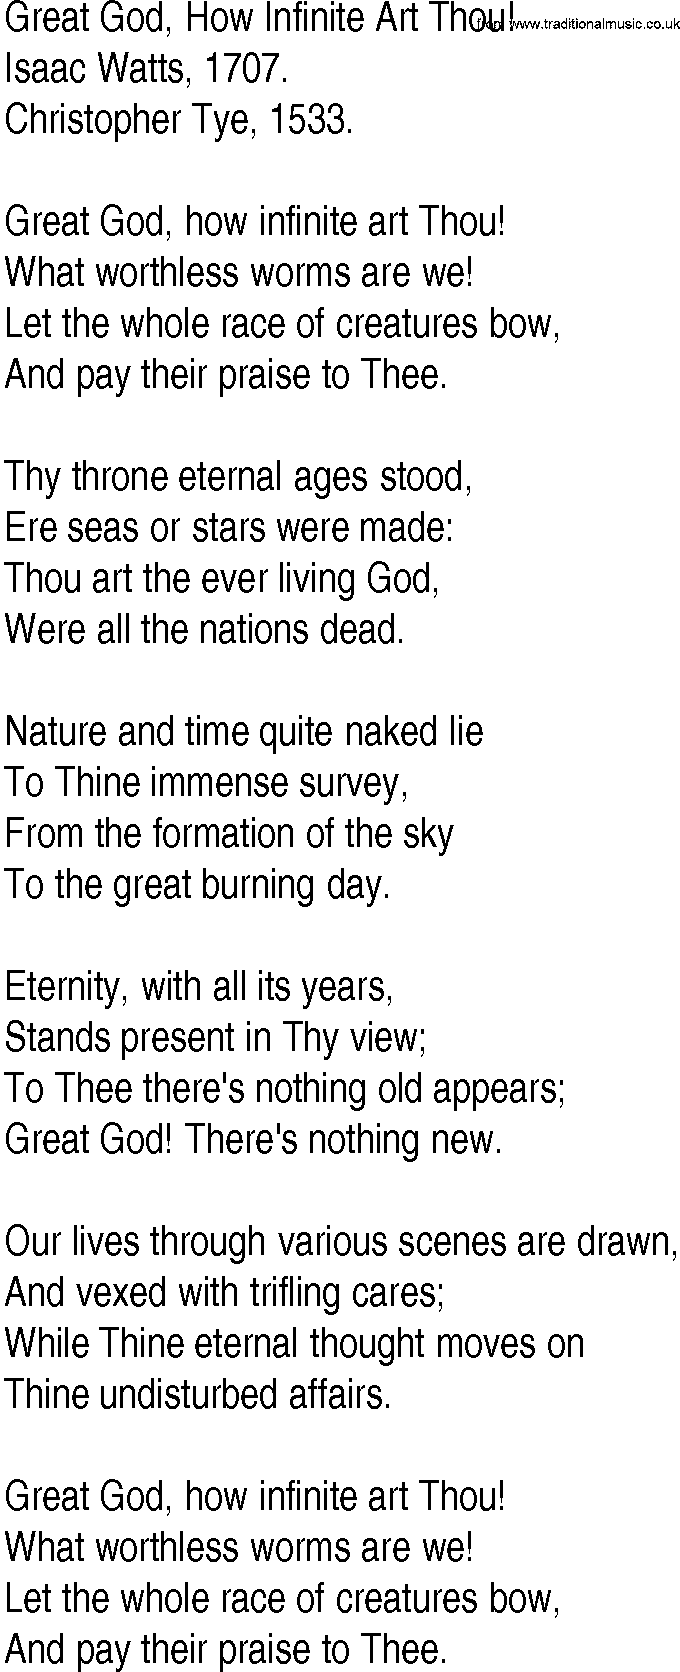 Hymn and Gospel Song: Great God, How Infinite Art Thou! by Isaac Watts lyrics